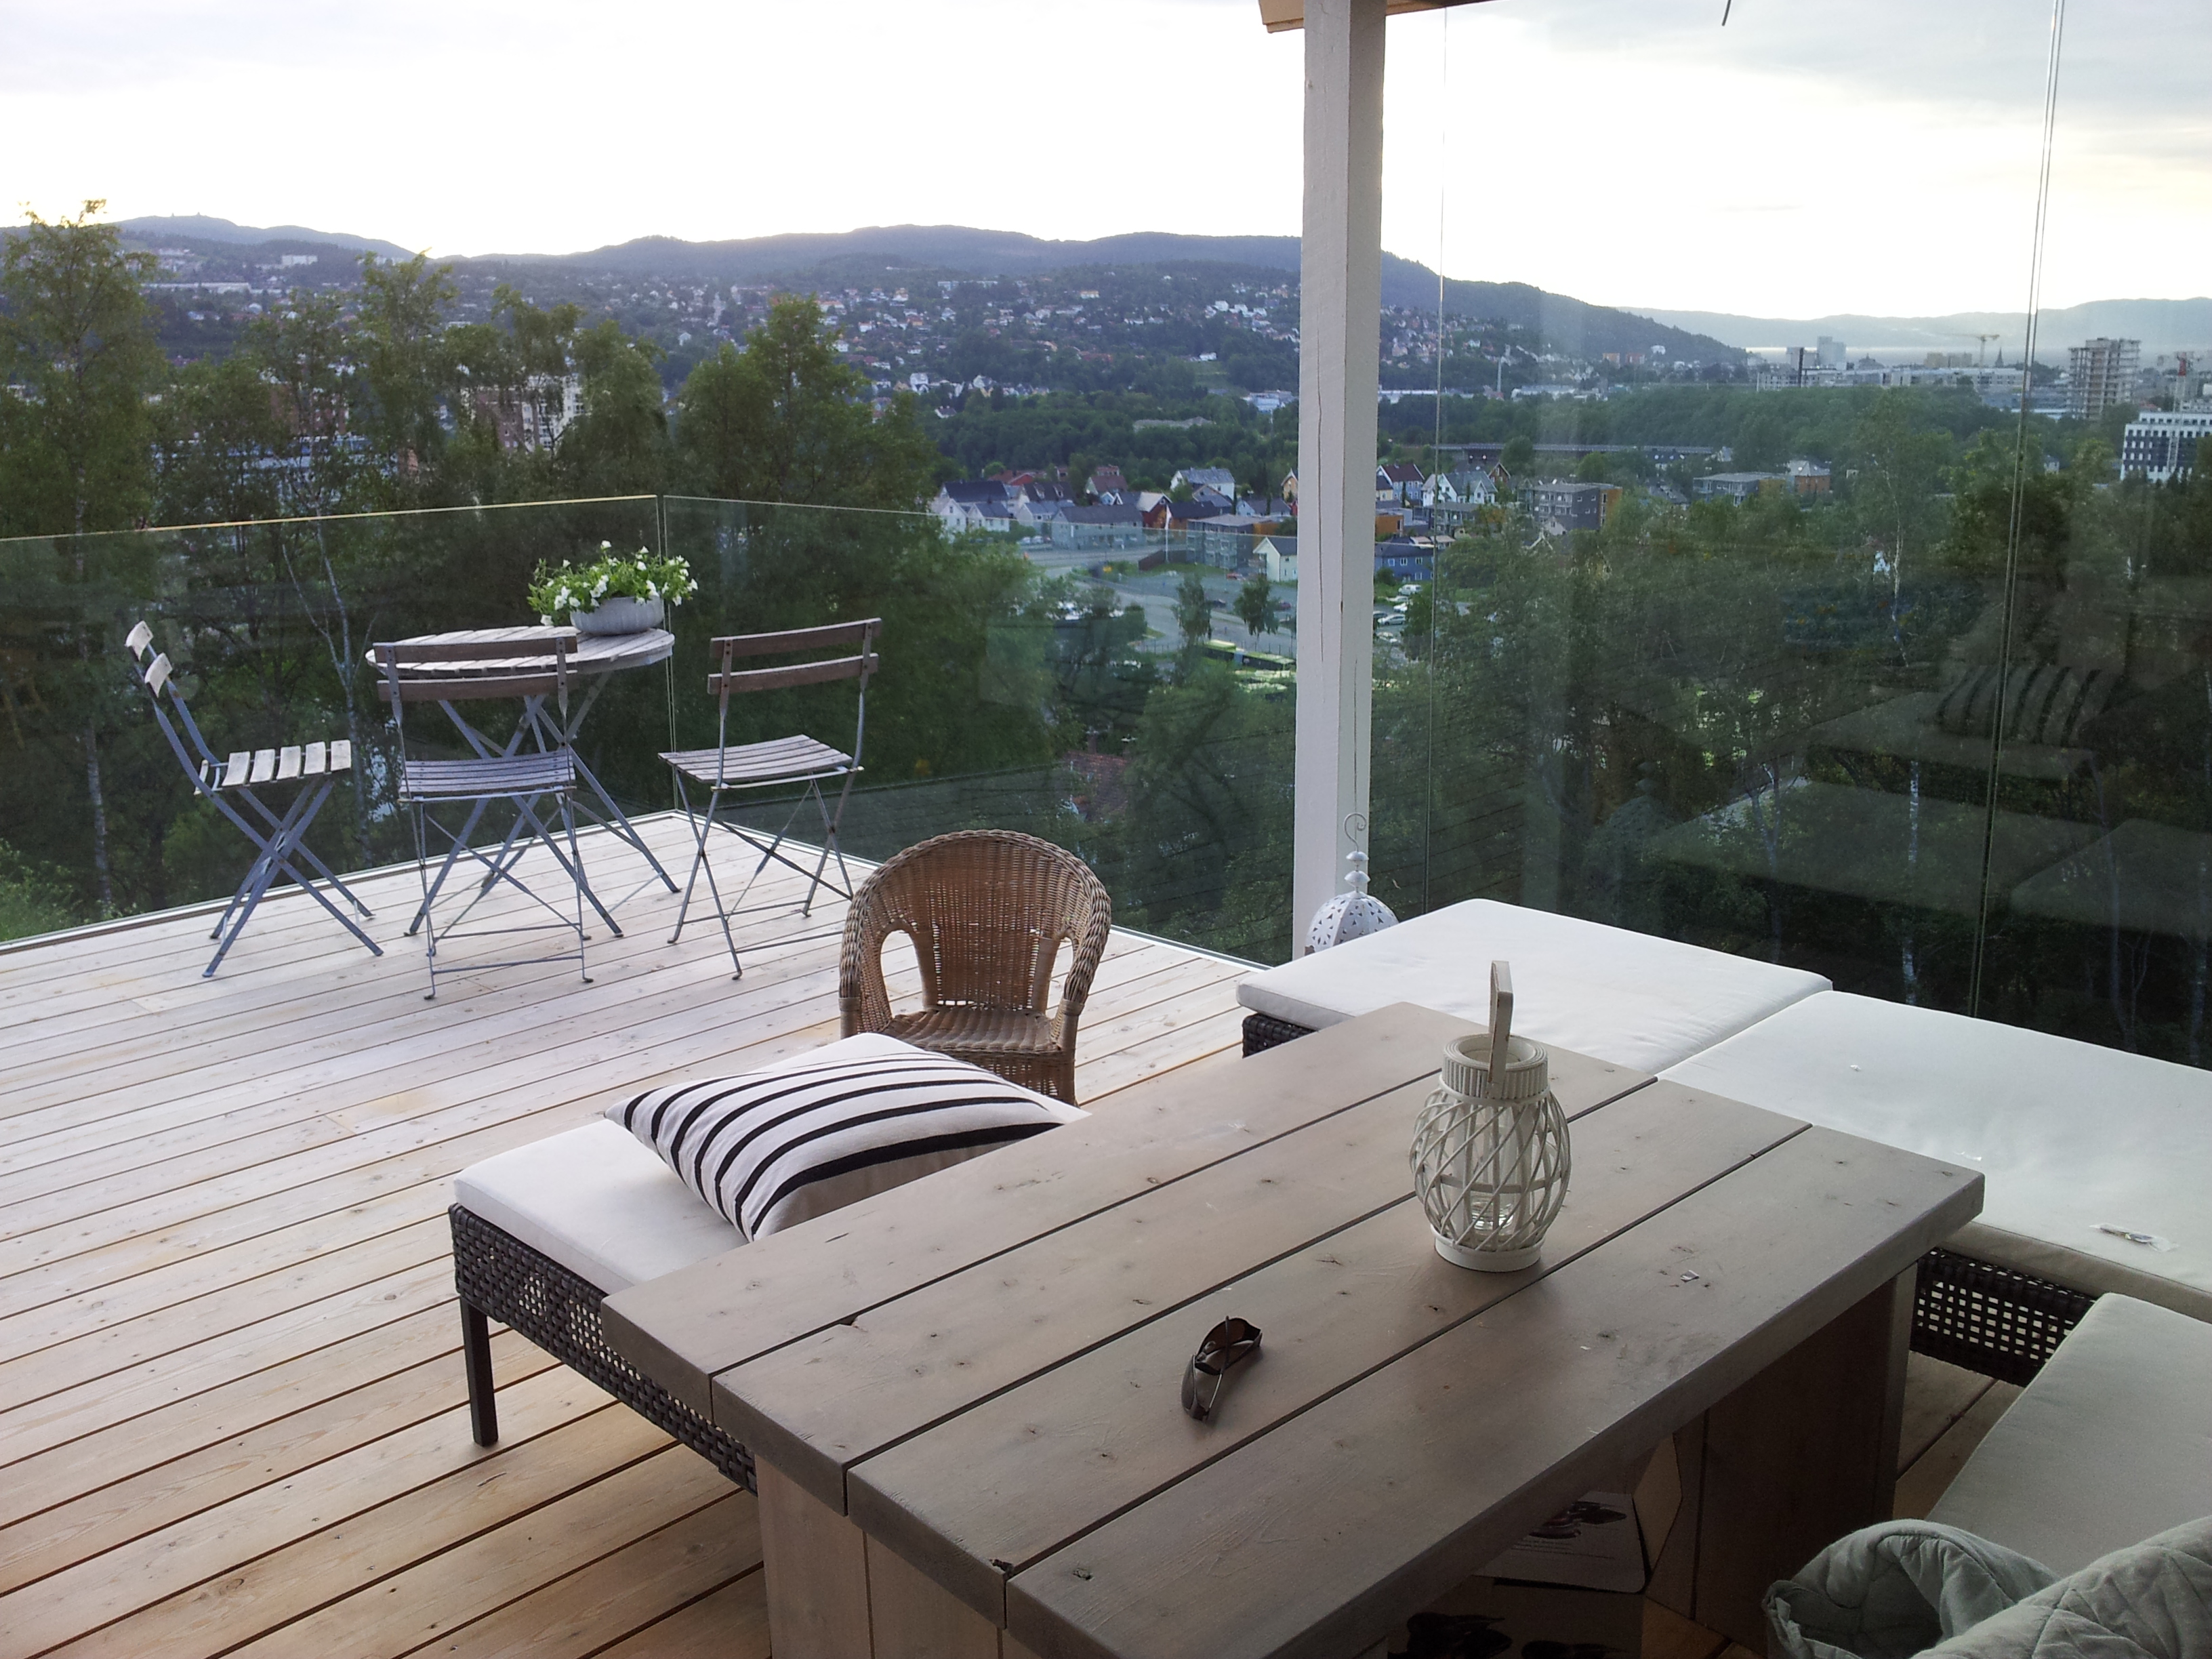 Vis meg din flotte terrasse/veranda - 2012-07-06 20.24.14.jpg - 2rgeir